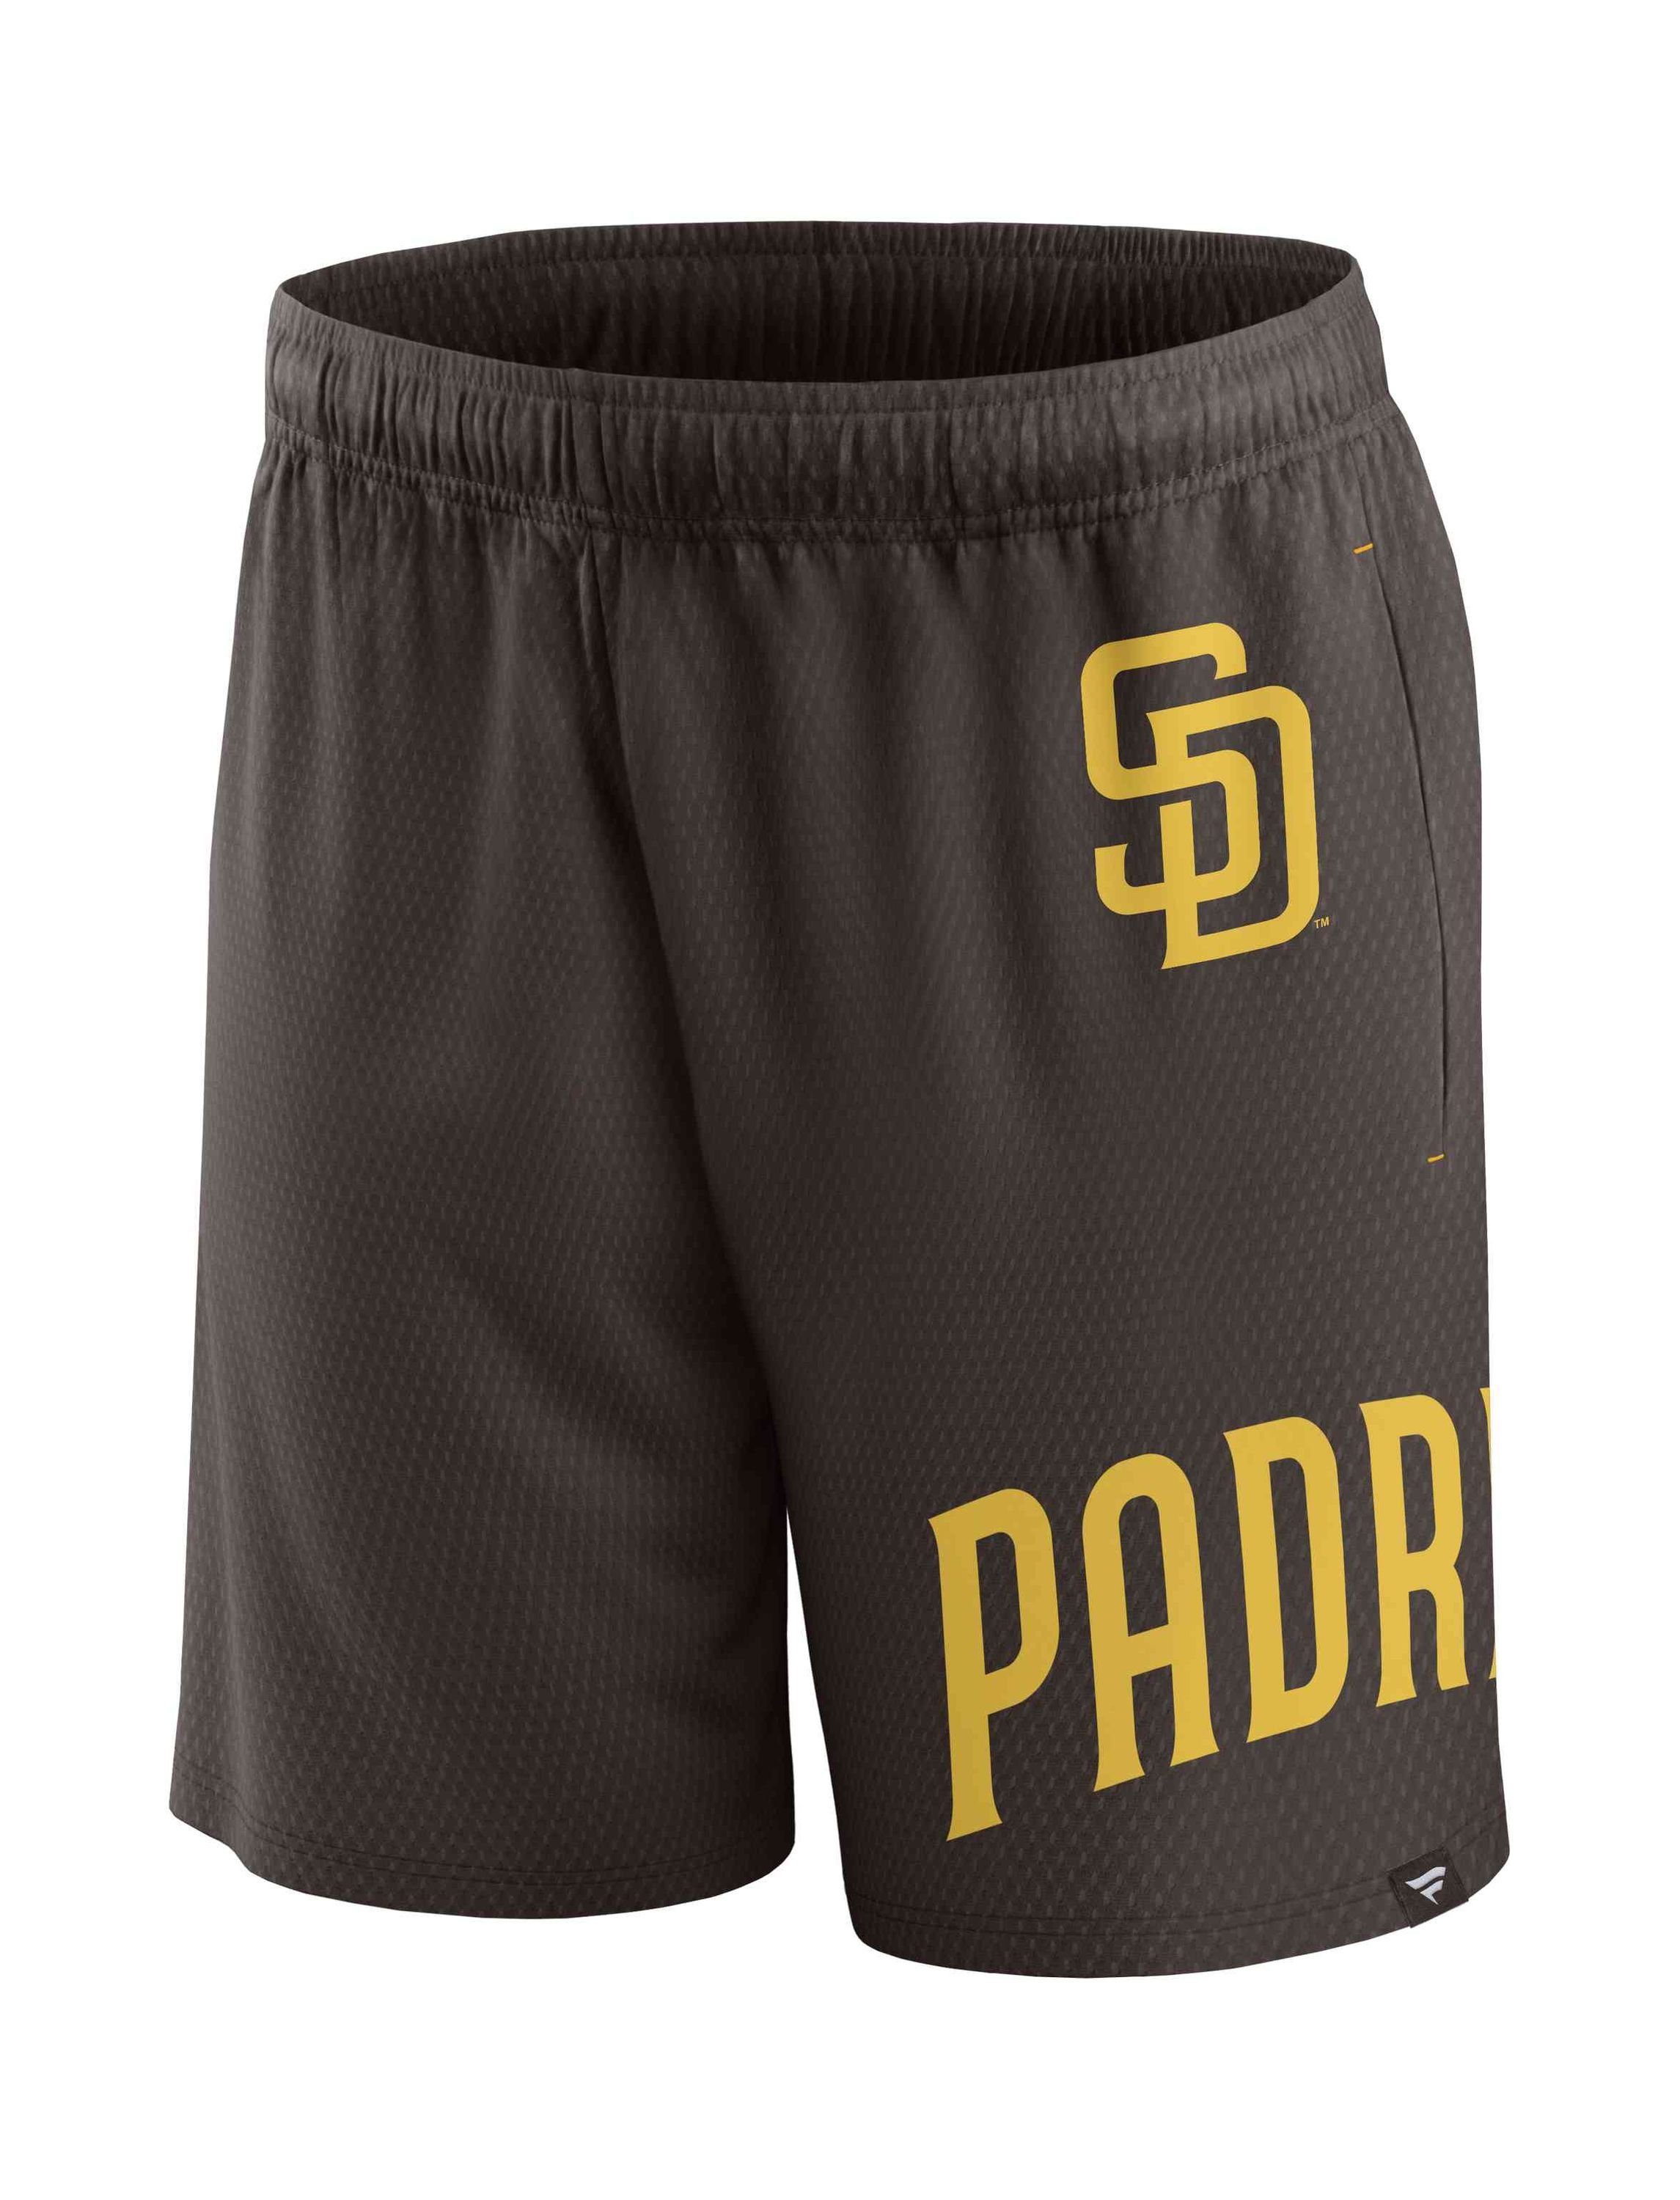 Padres San MLB Diego Fanatics Shorts Mesh